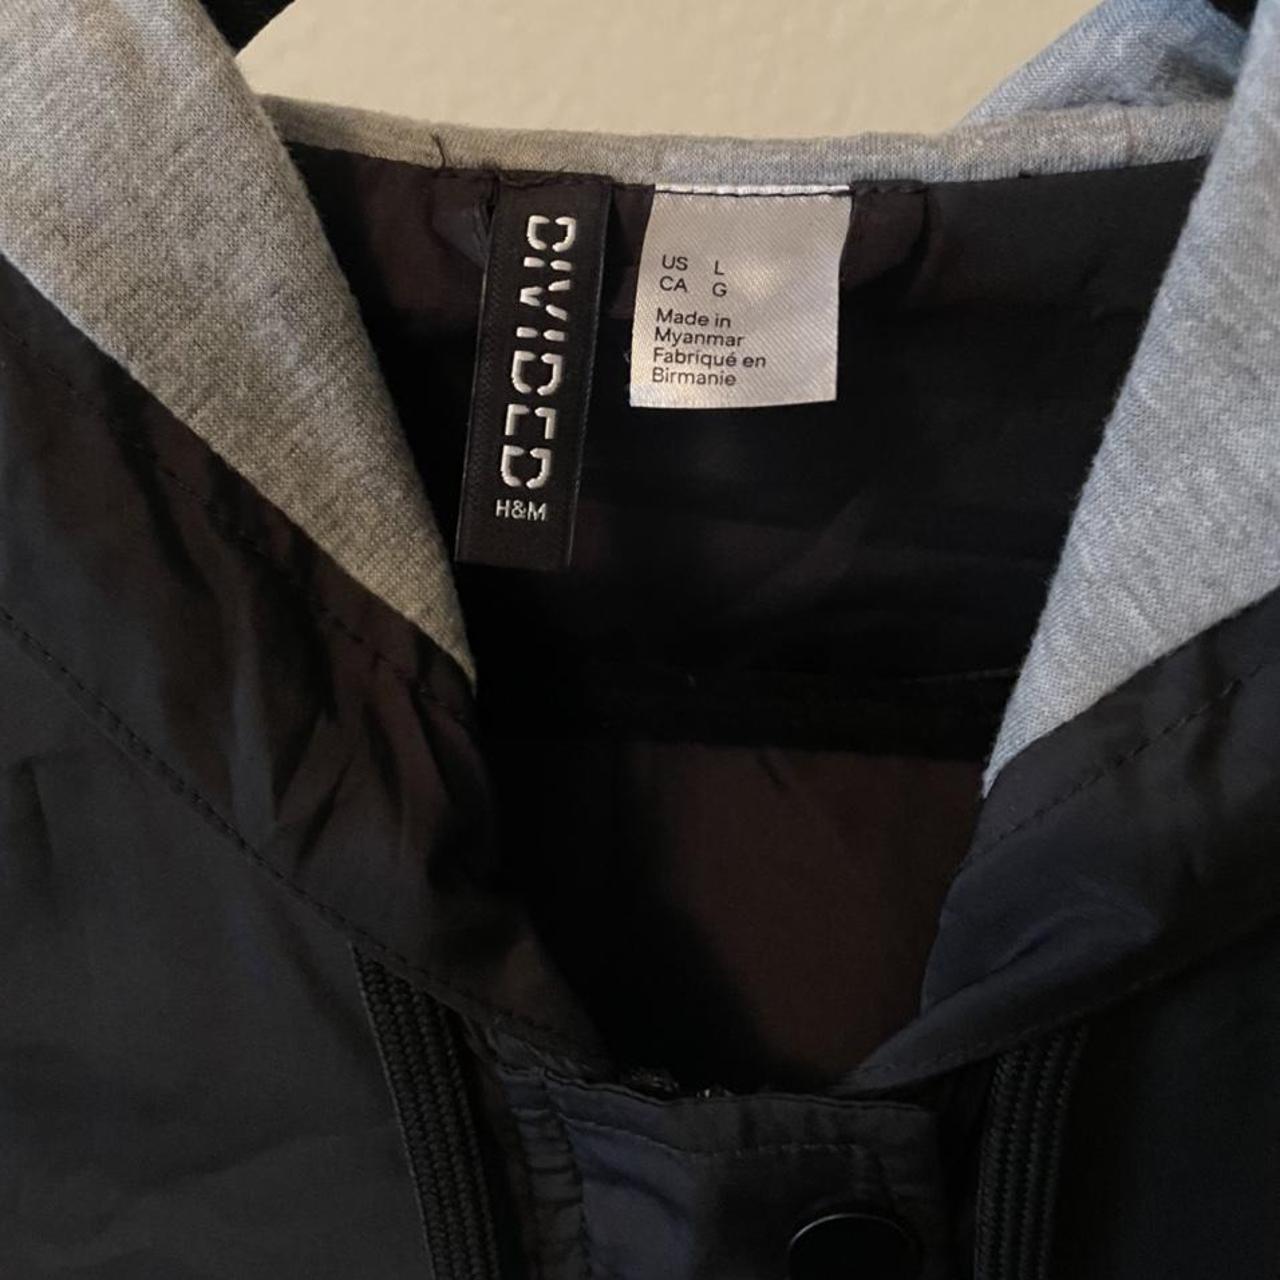 Product Image 3 - H&M divided black windbreaker jacket
Worn